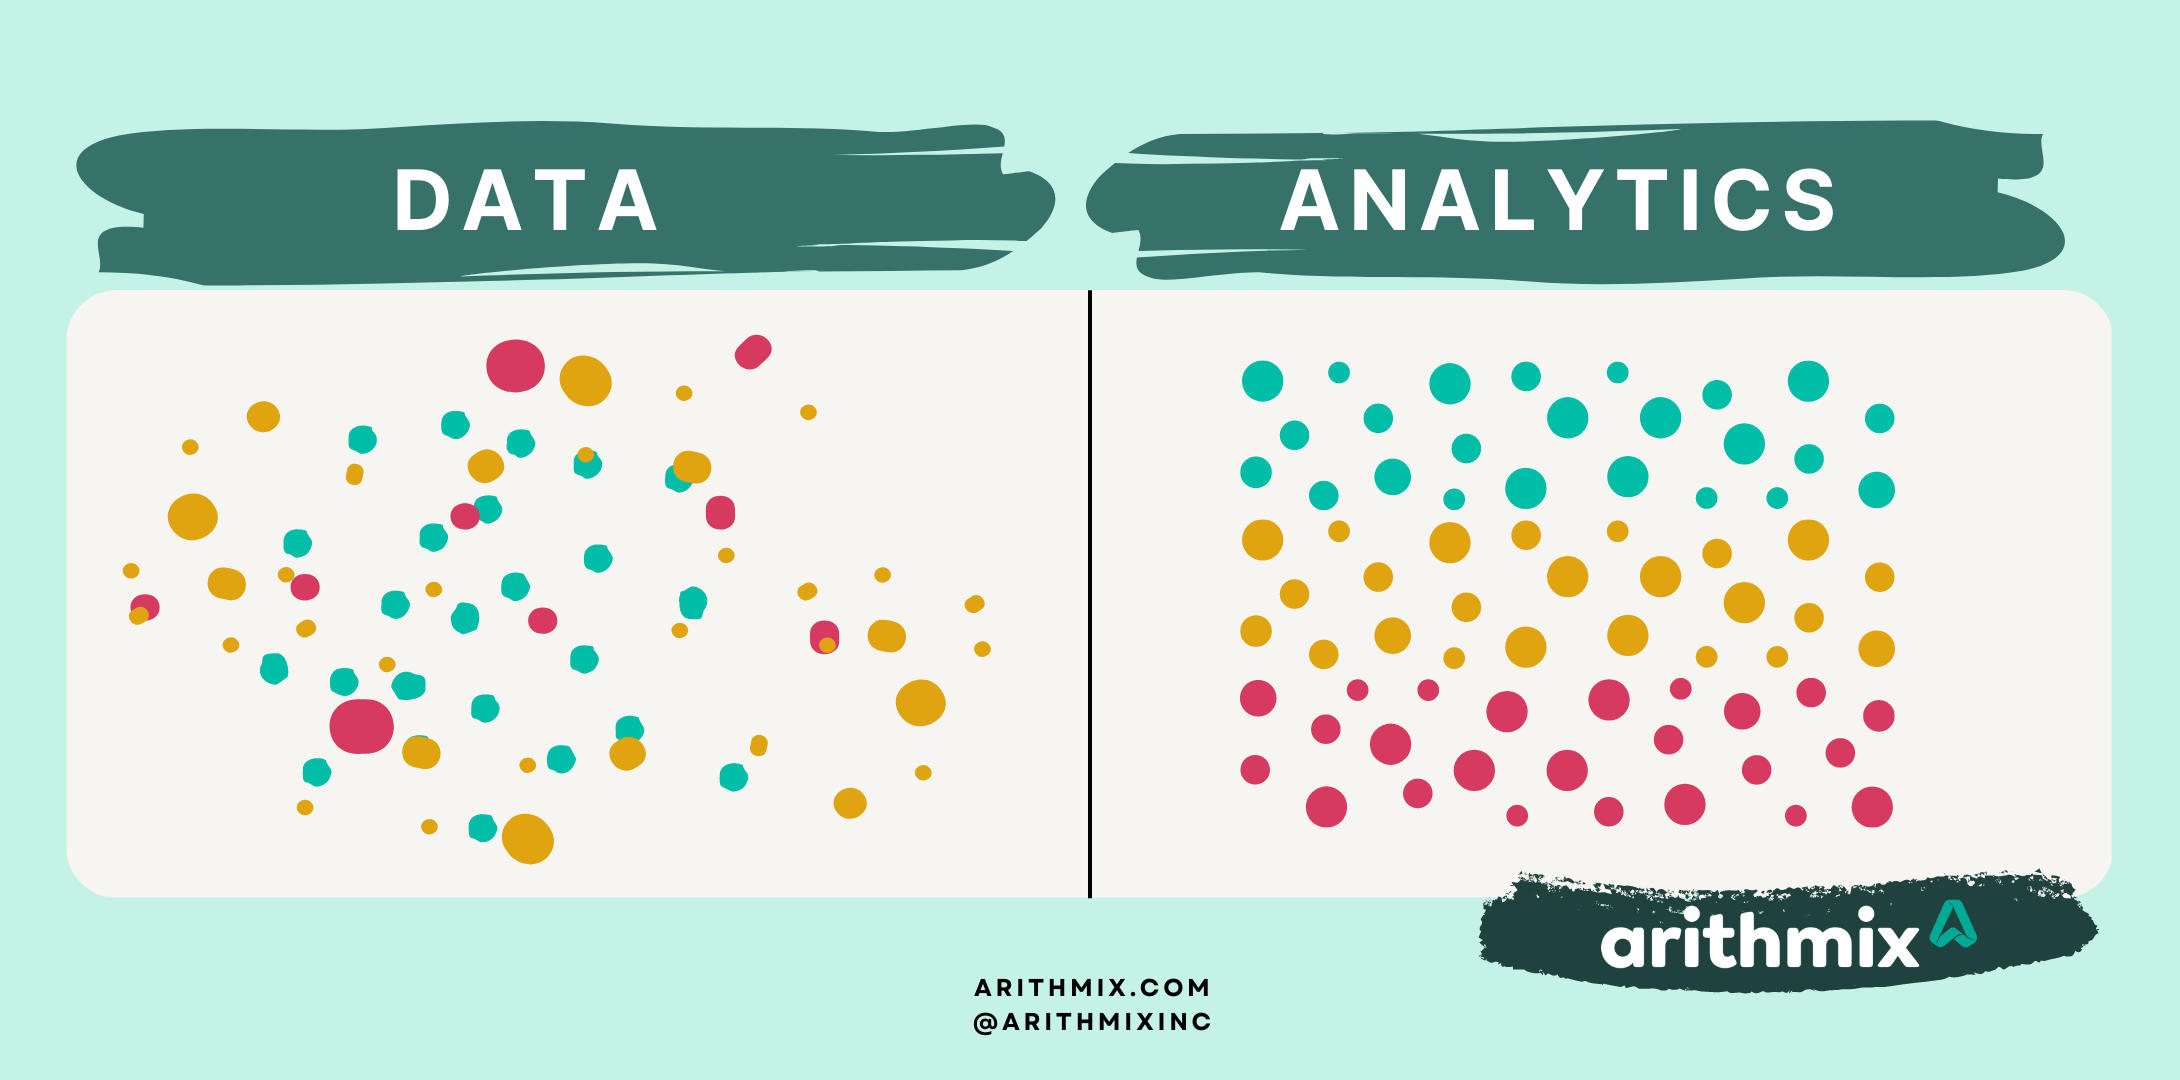 data vs analytics - Arithmix blog